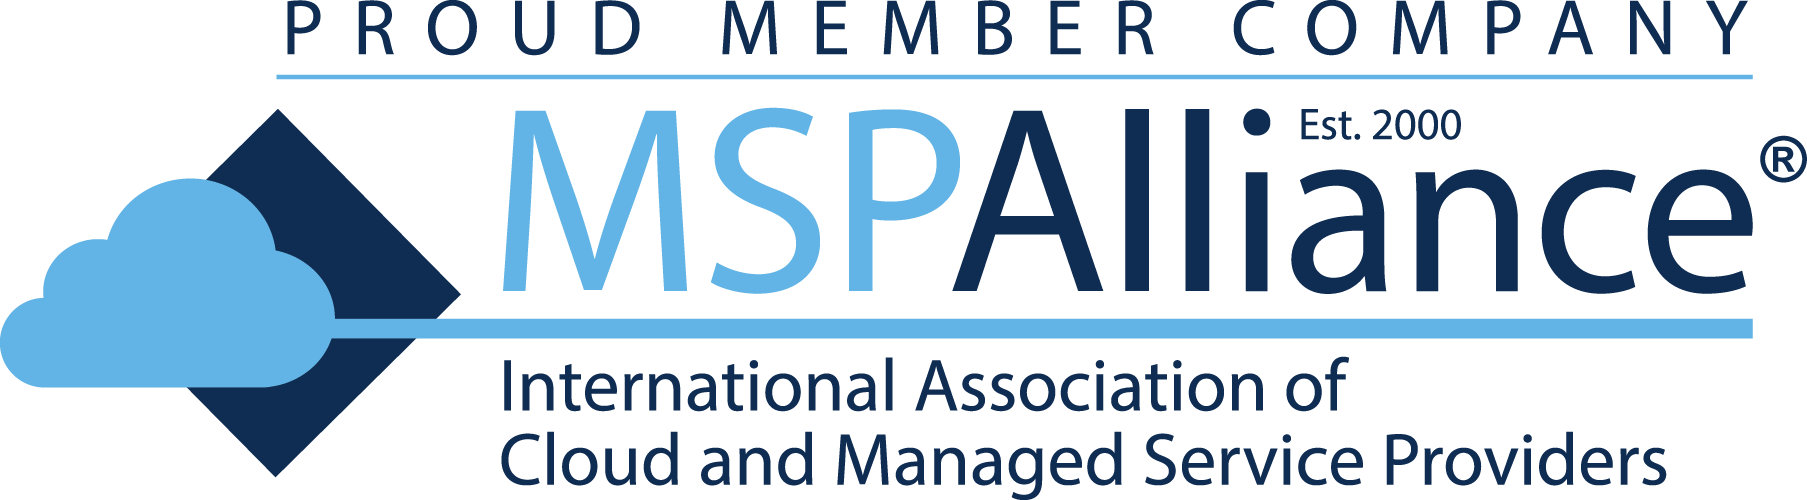 MSPAlliance Member Company